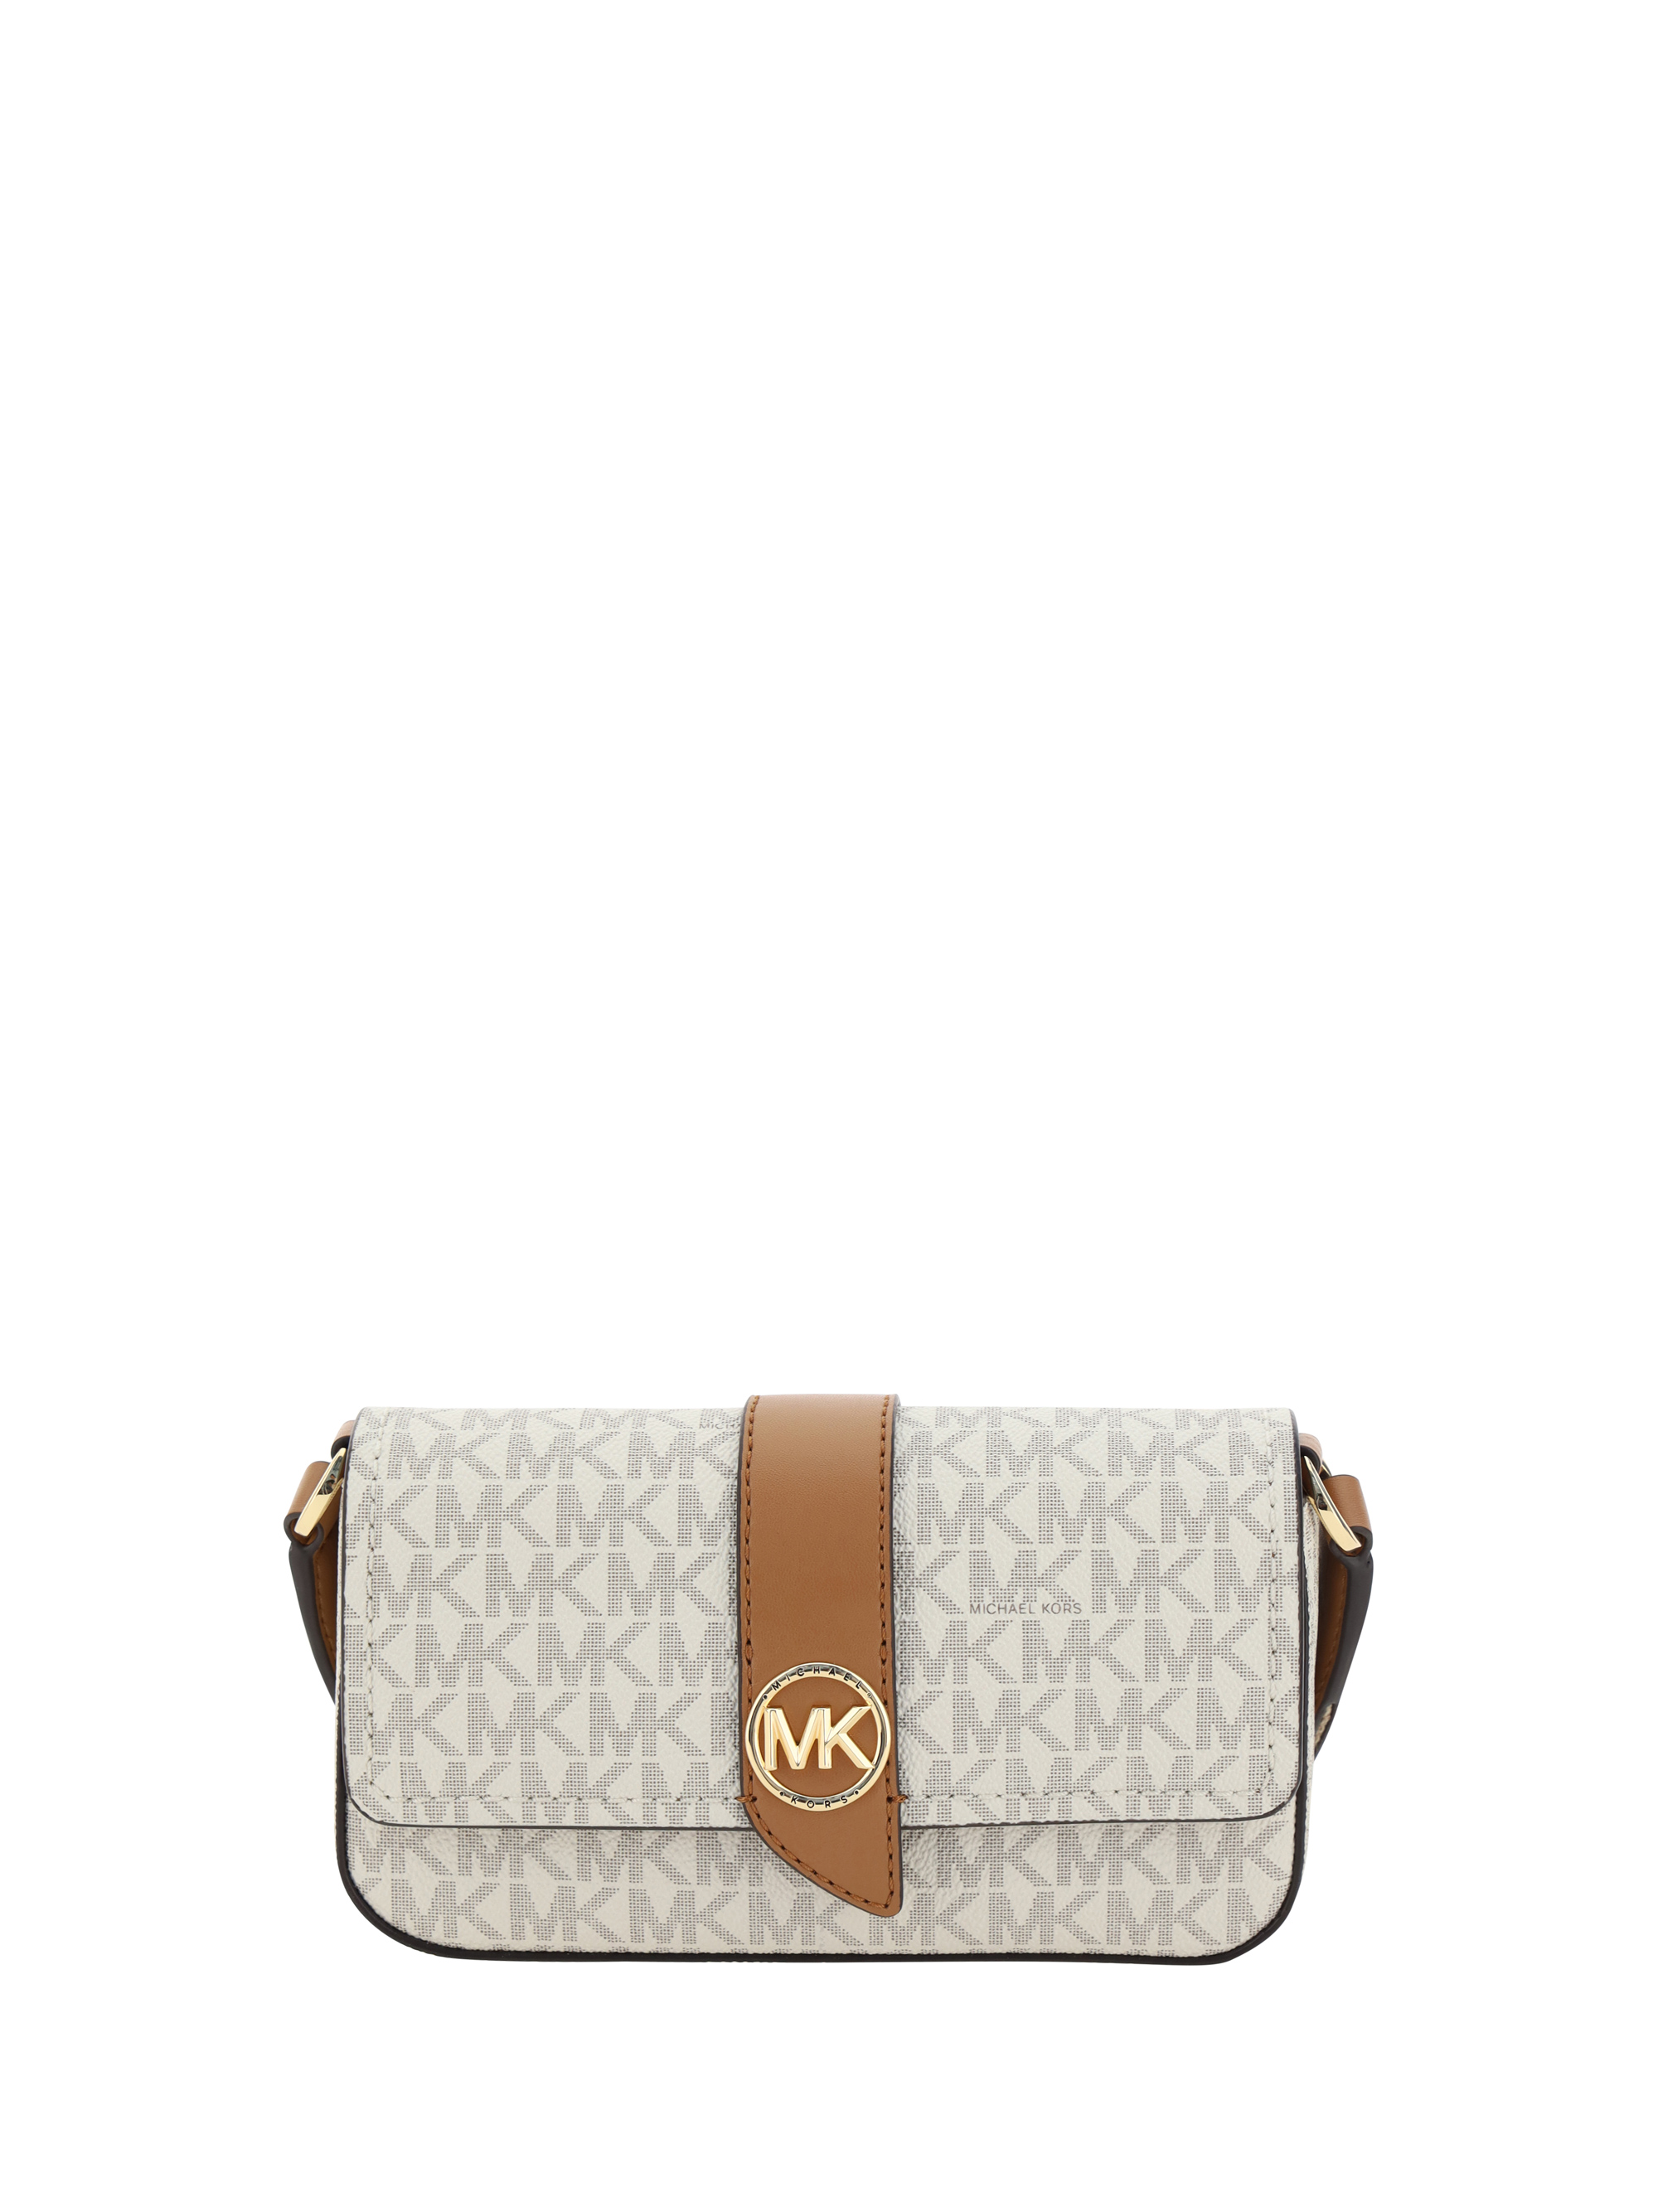  Michael Kors Bag, Vanilla/Acrn : Clothing, Shoes & Jewelry